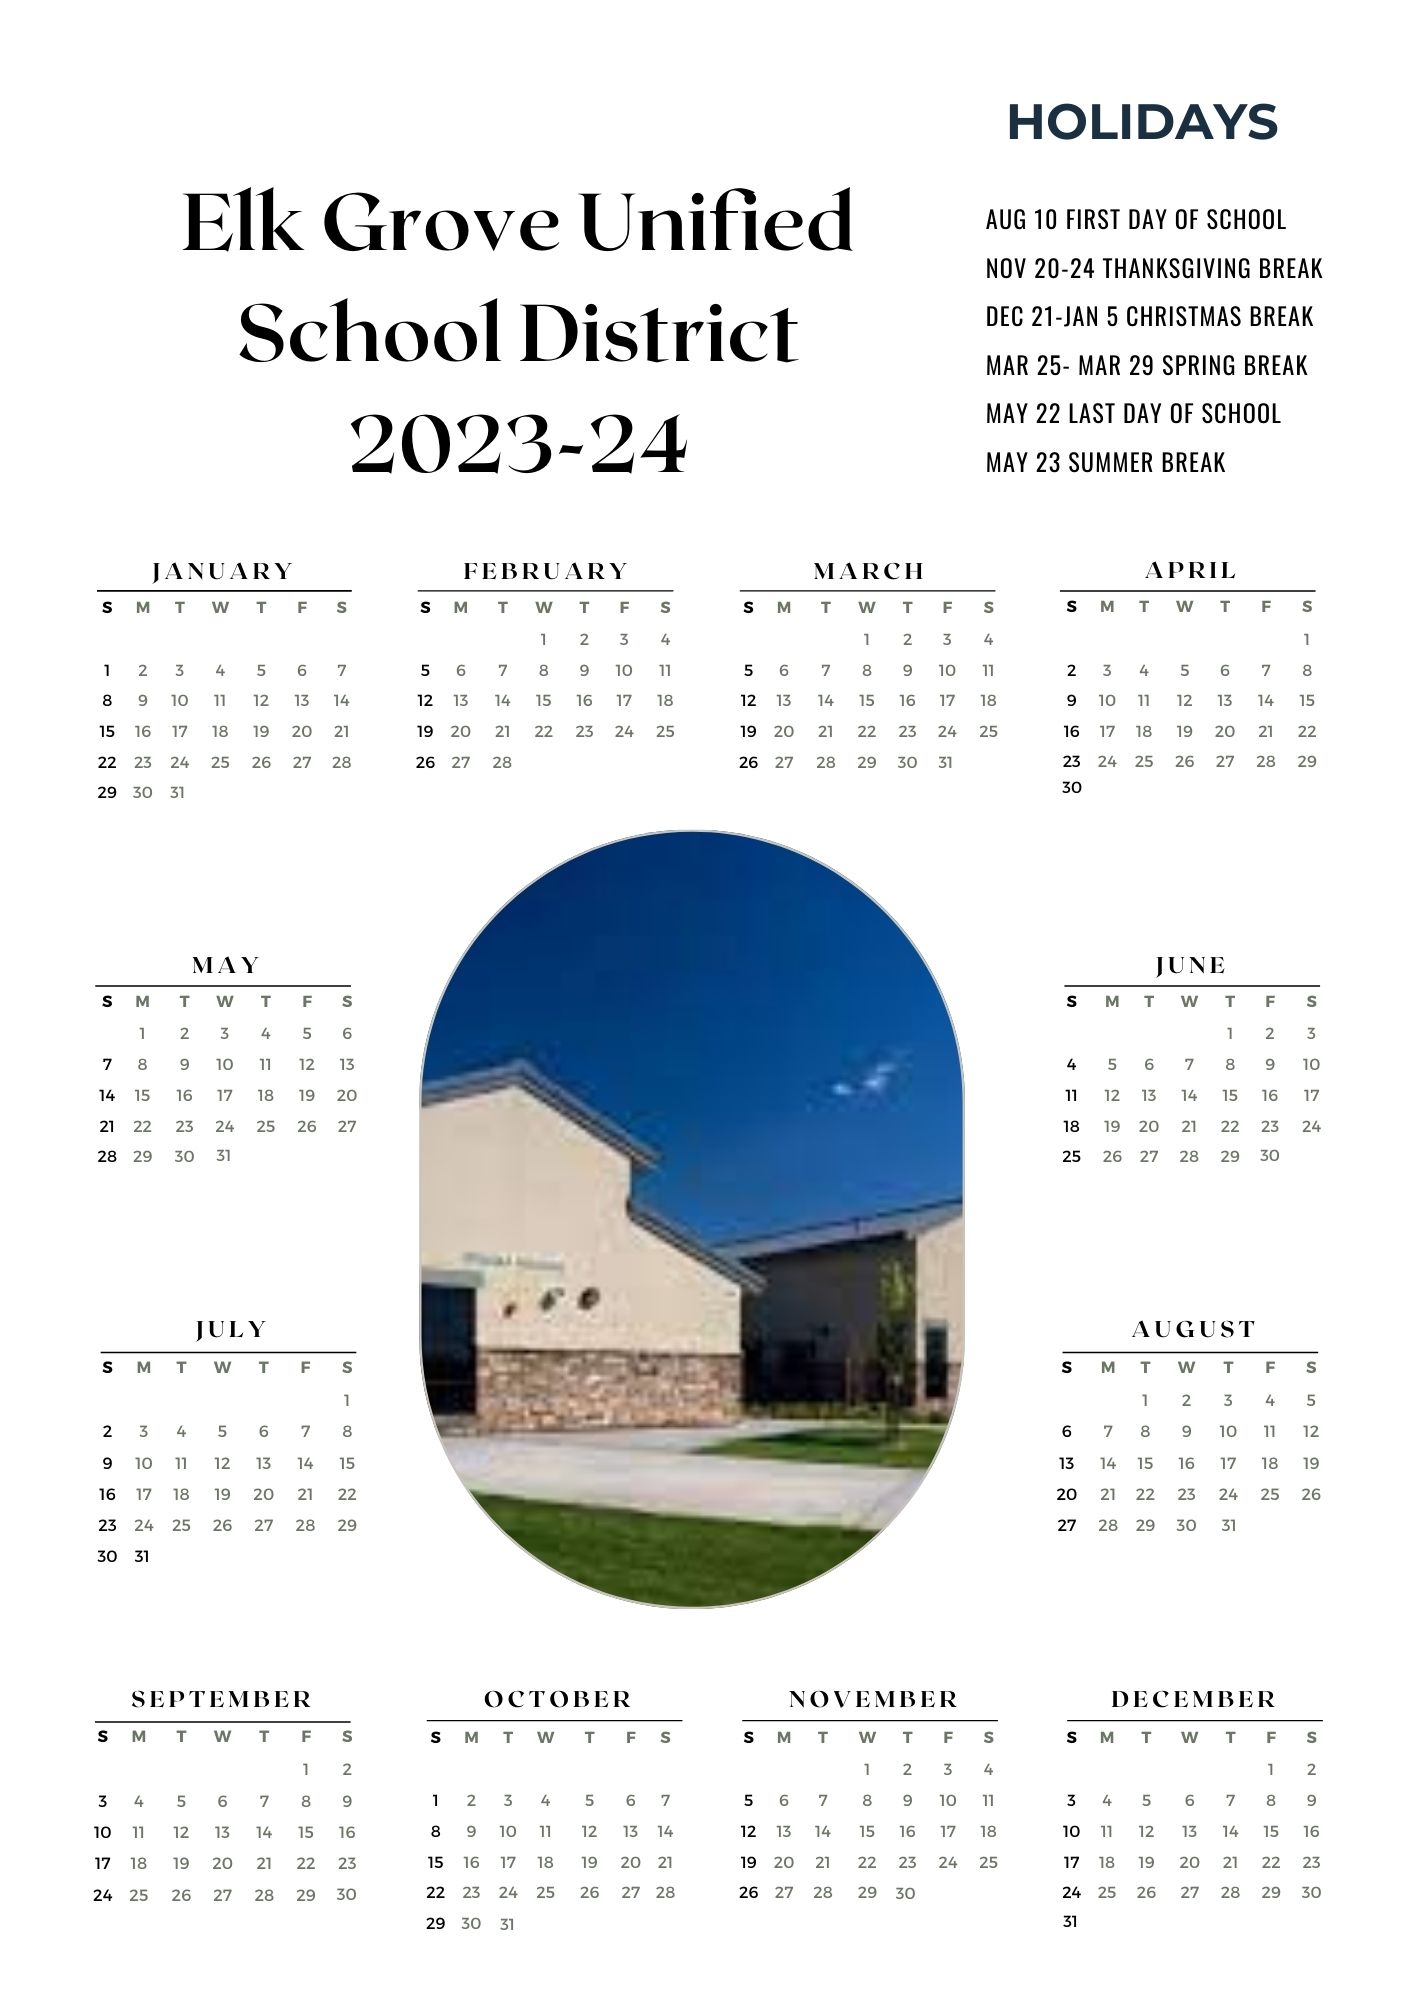 Elk Grove Unified School District Calendar Holidays 20232024